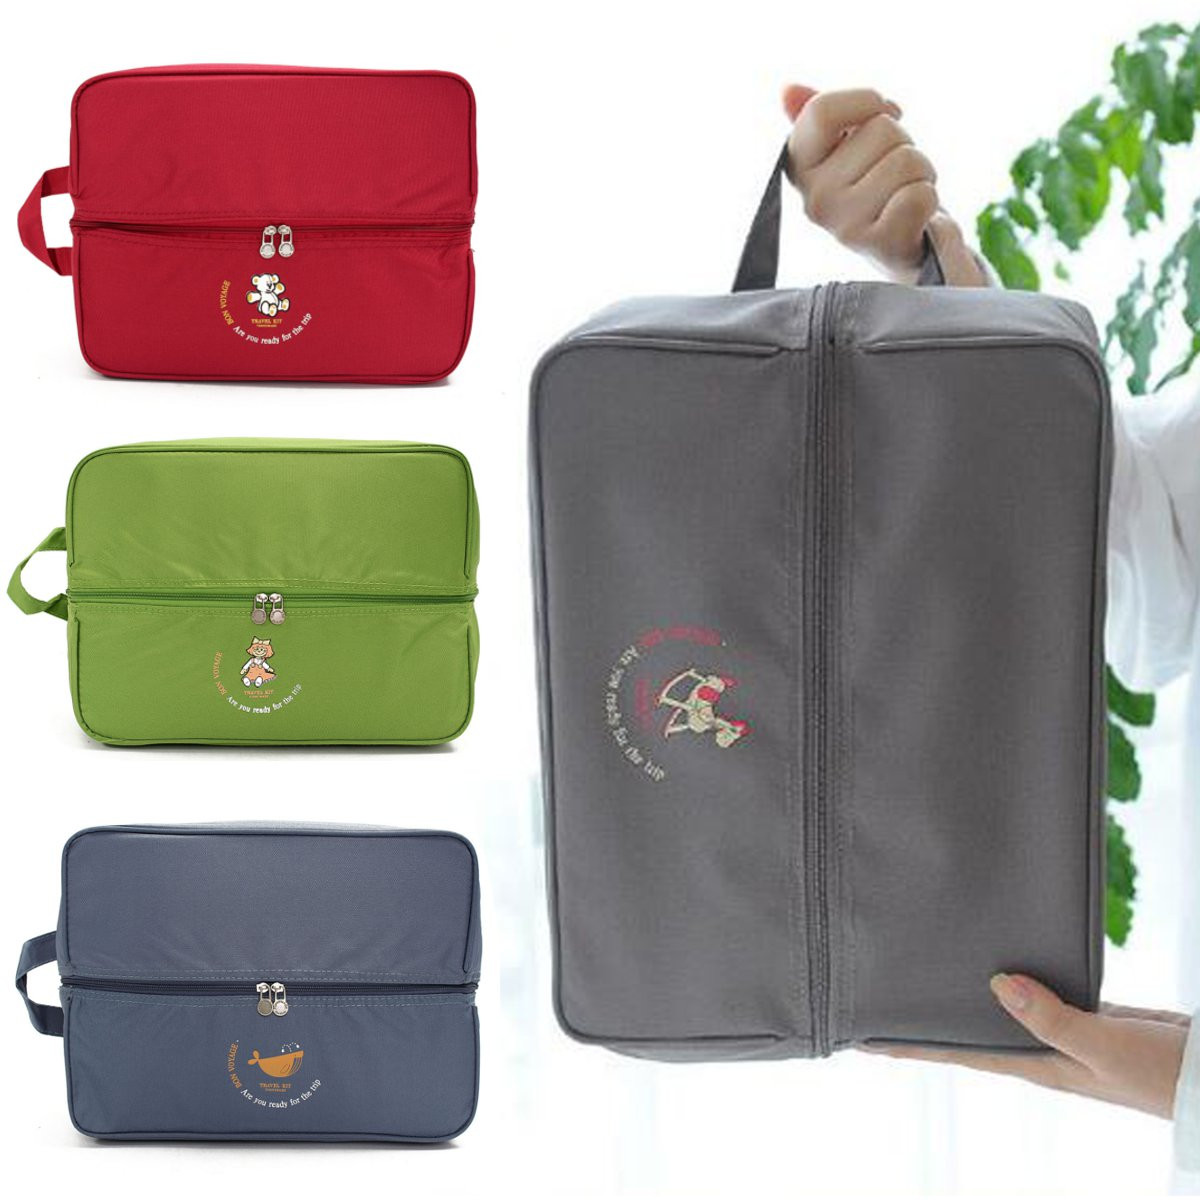 Portable-Nylon-Travel-Storage-Bag-Pouch-Bag-Case-Luggage-Cosmetic-Organizer-1460329-9